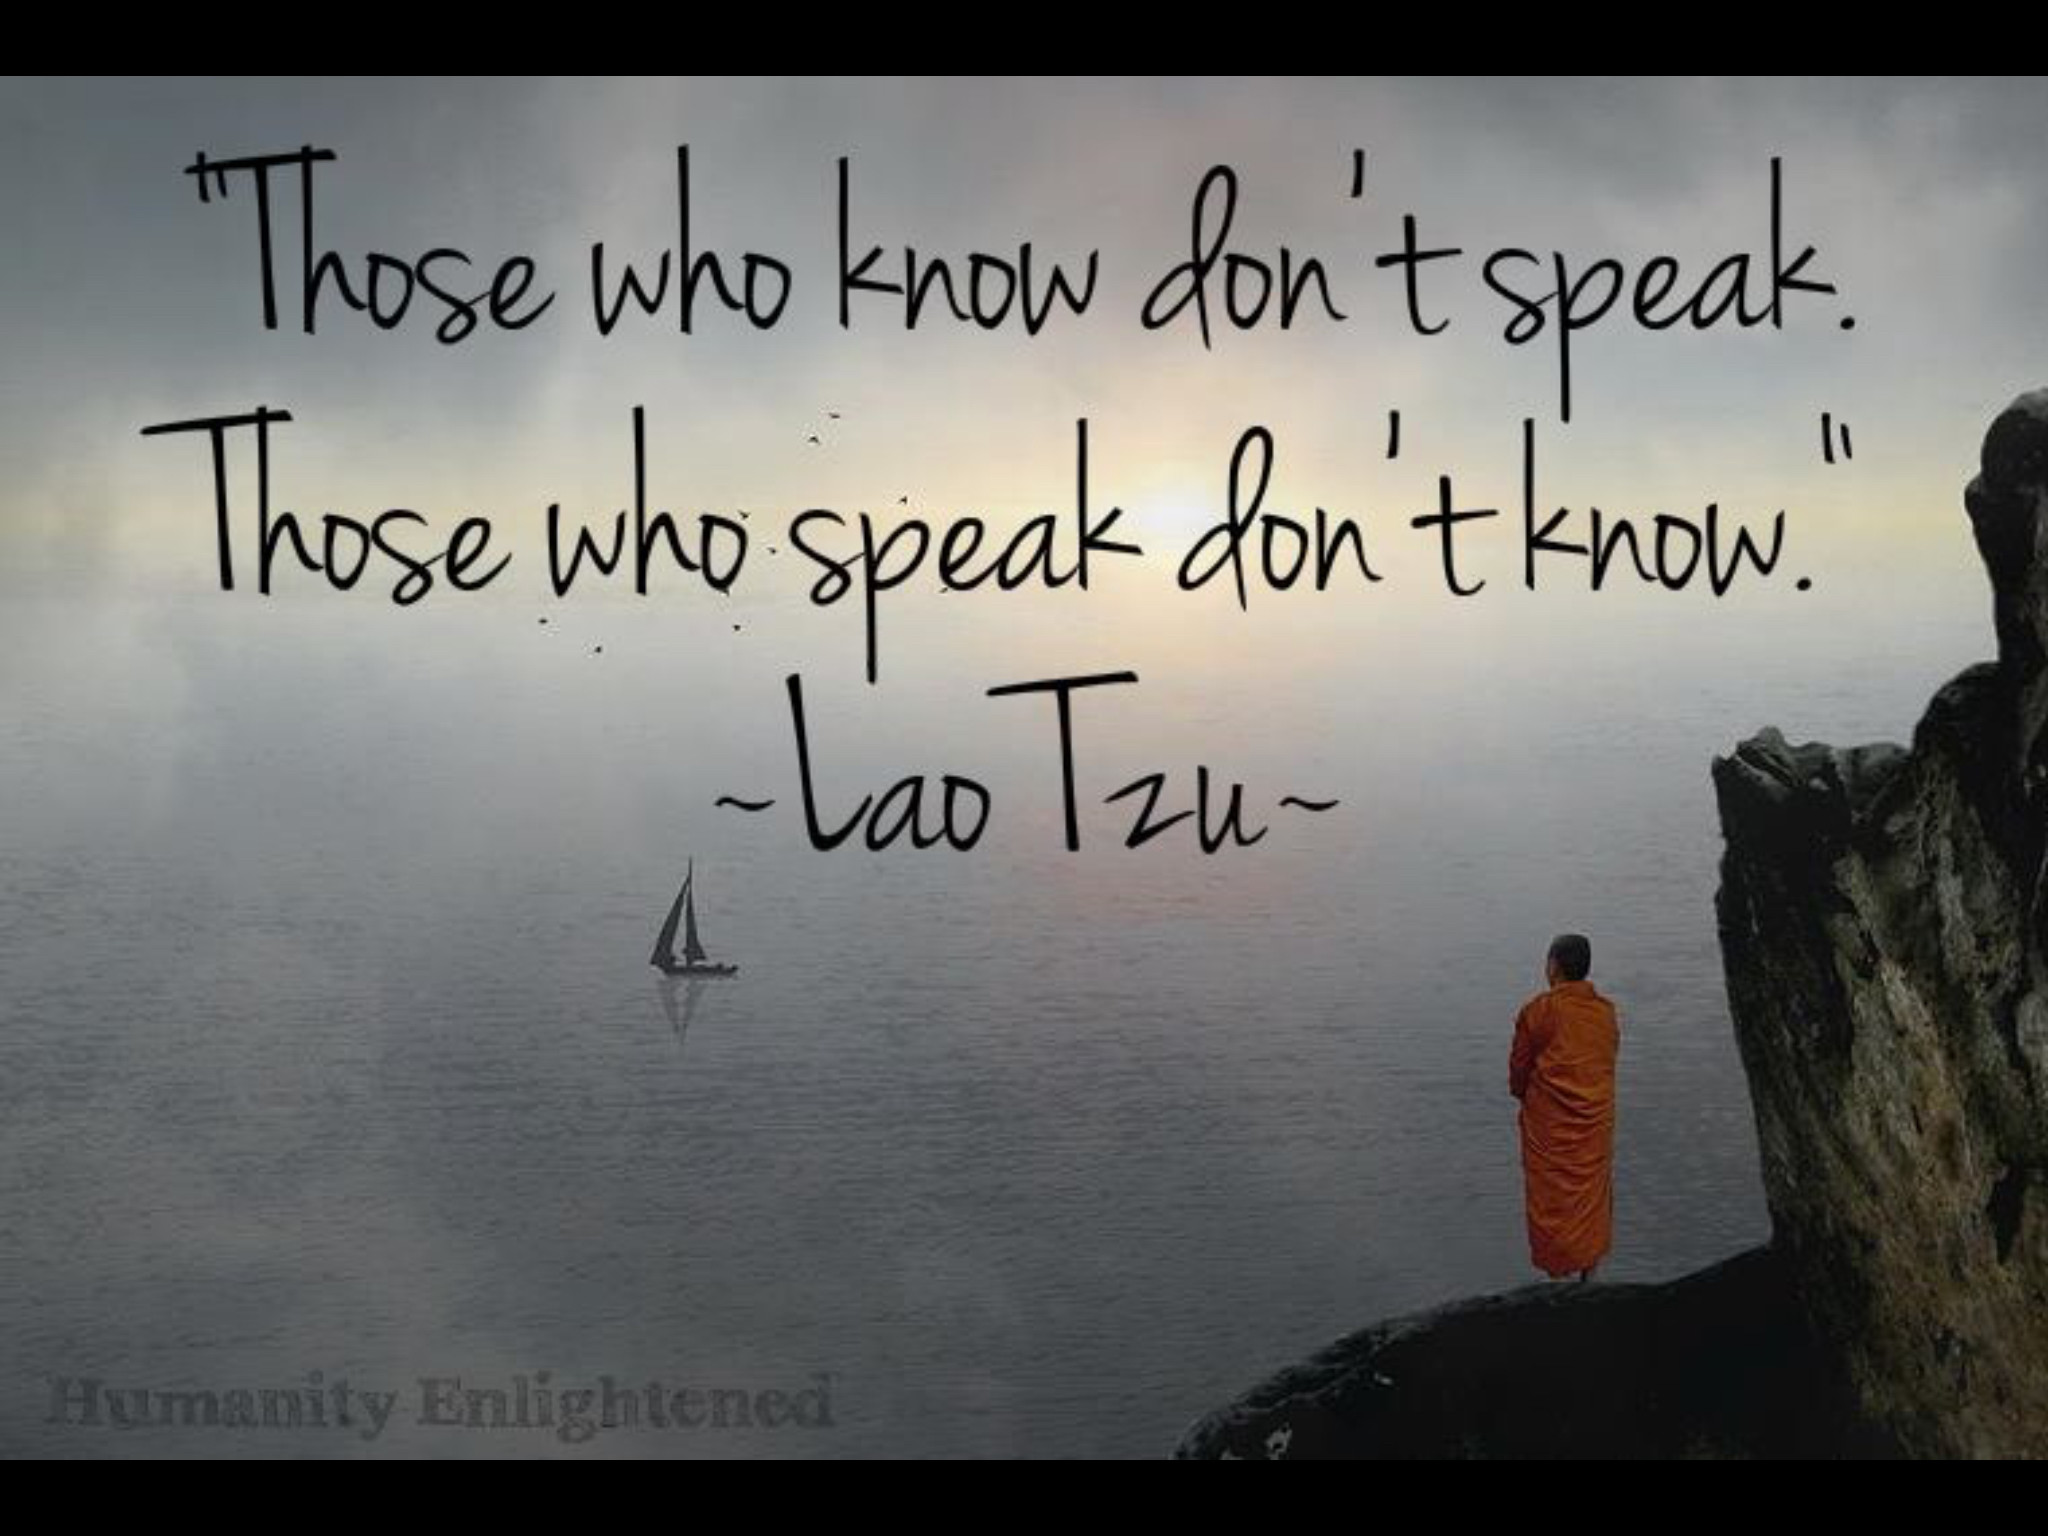 2048x1536 Lao Tzu. Wisdom. Those who know don't speak. Those who speak